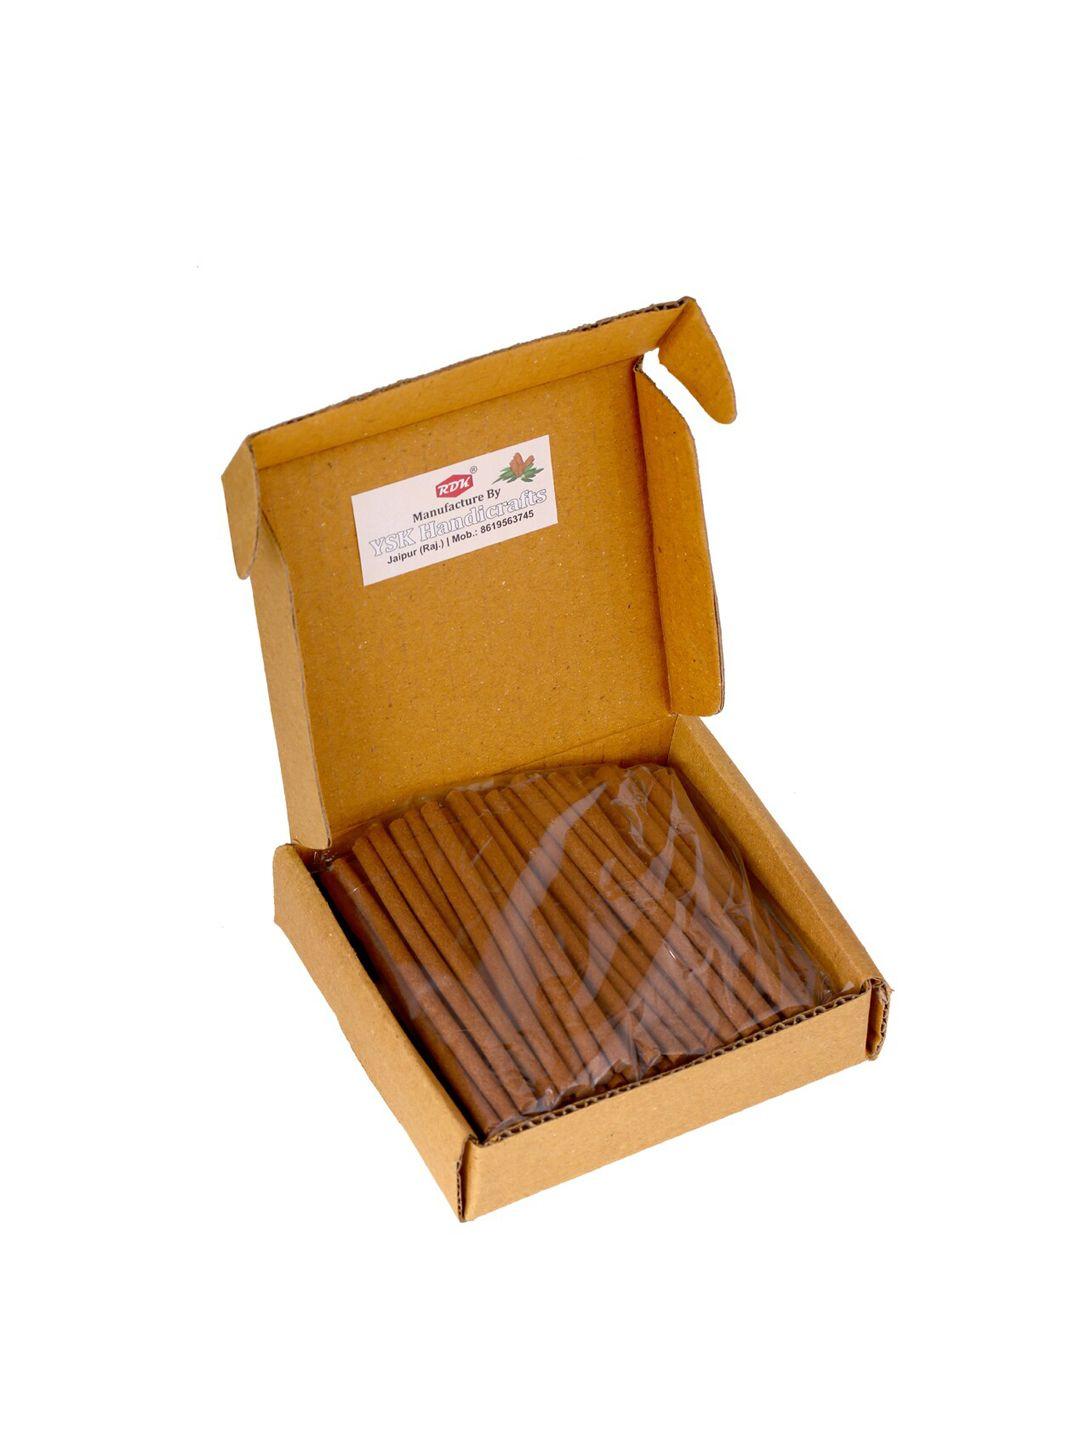 rdk-sandalwood-flavour-charcoal-free-ayurvedic-dhoop-sticks-with-holder-200-gram